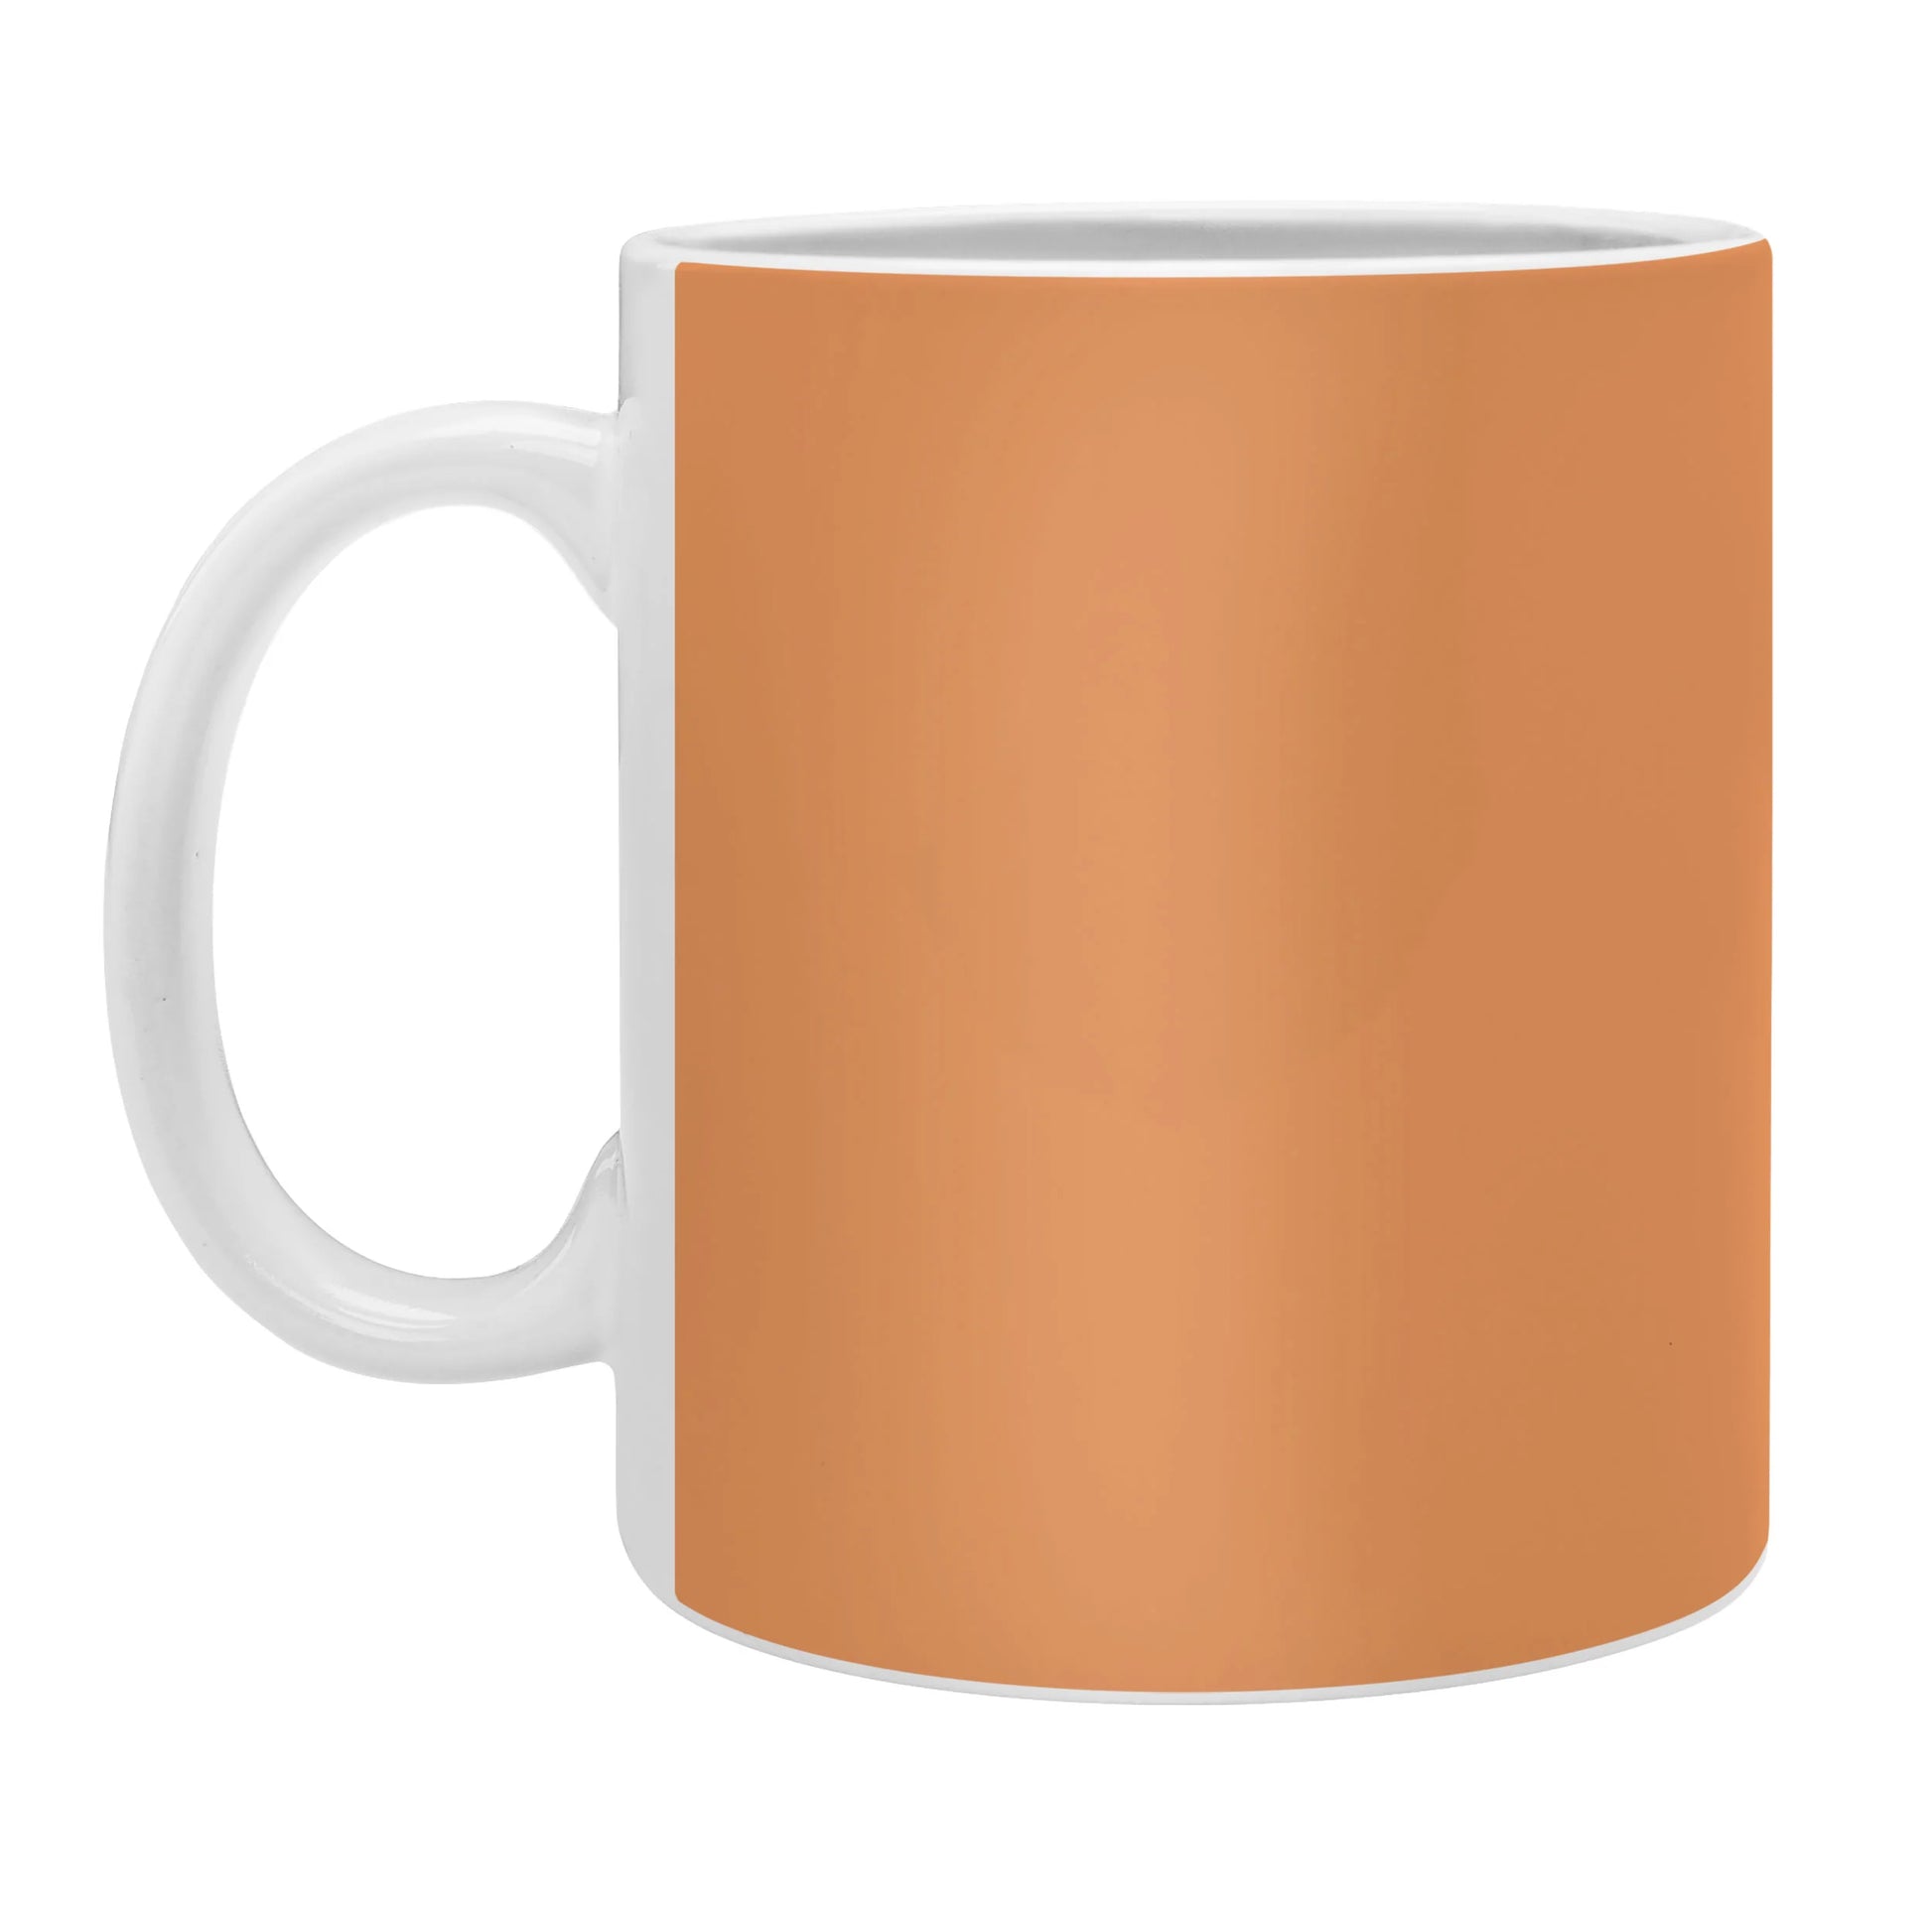 Zodiac Coffee Mug - Virgo